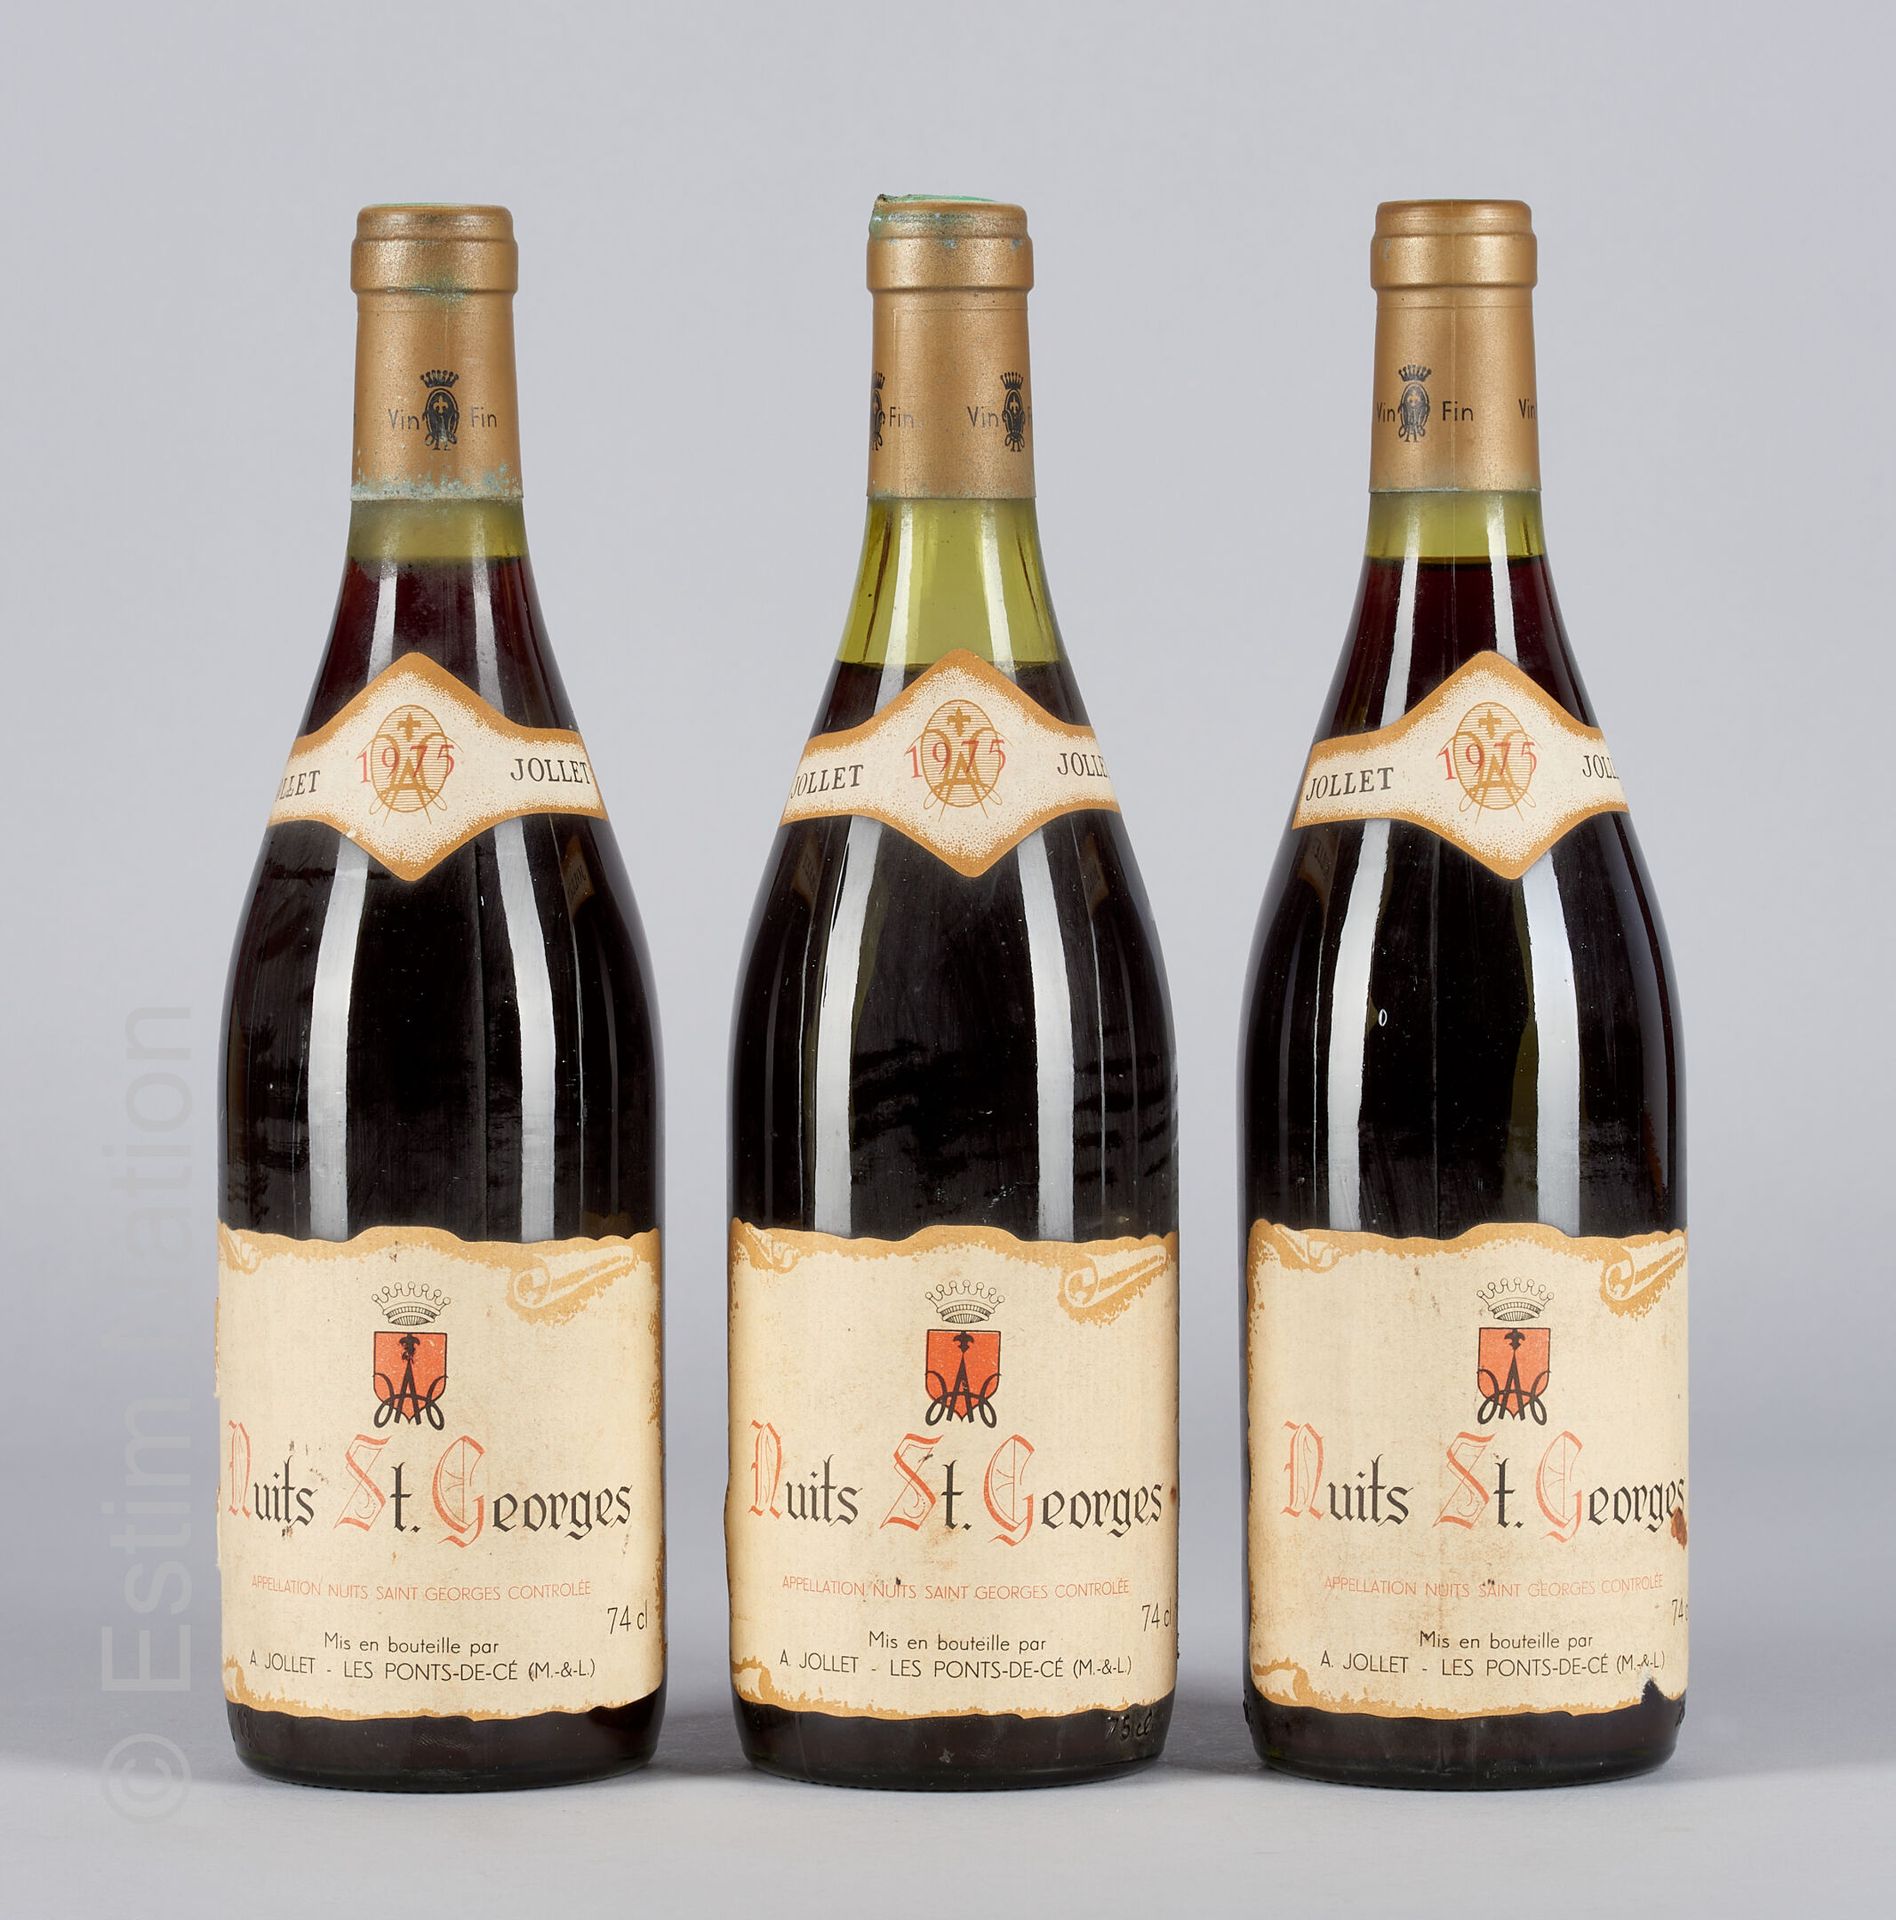 BOURGOGNE 3 bottles of Nuits Saint-Georges 1975 Les ponts de Ce Mau

(N. 1 betwe&hellip;